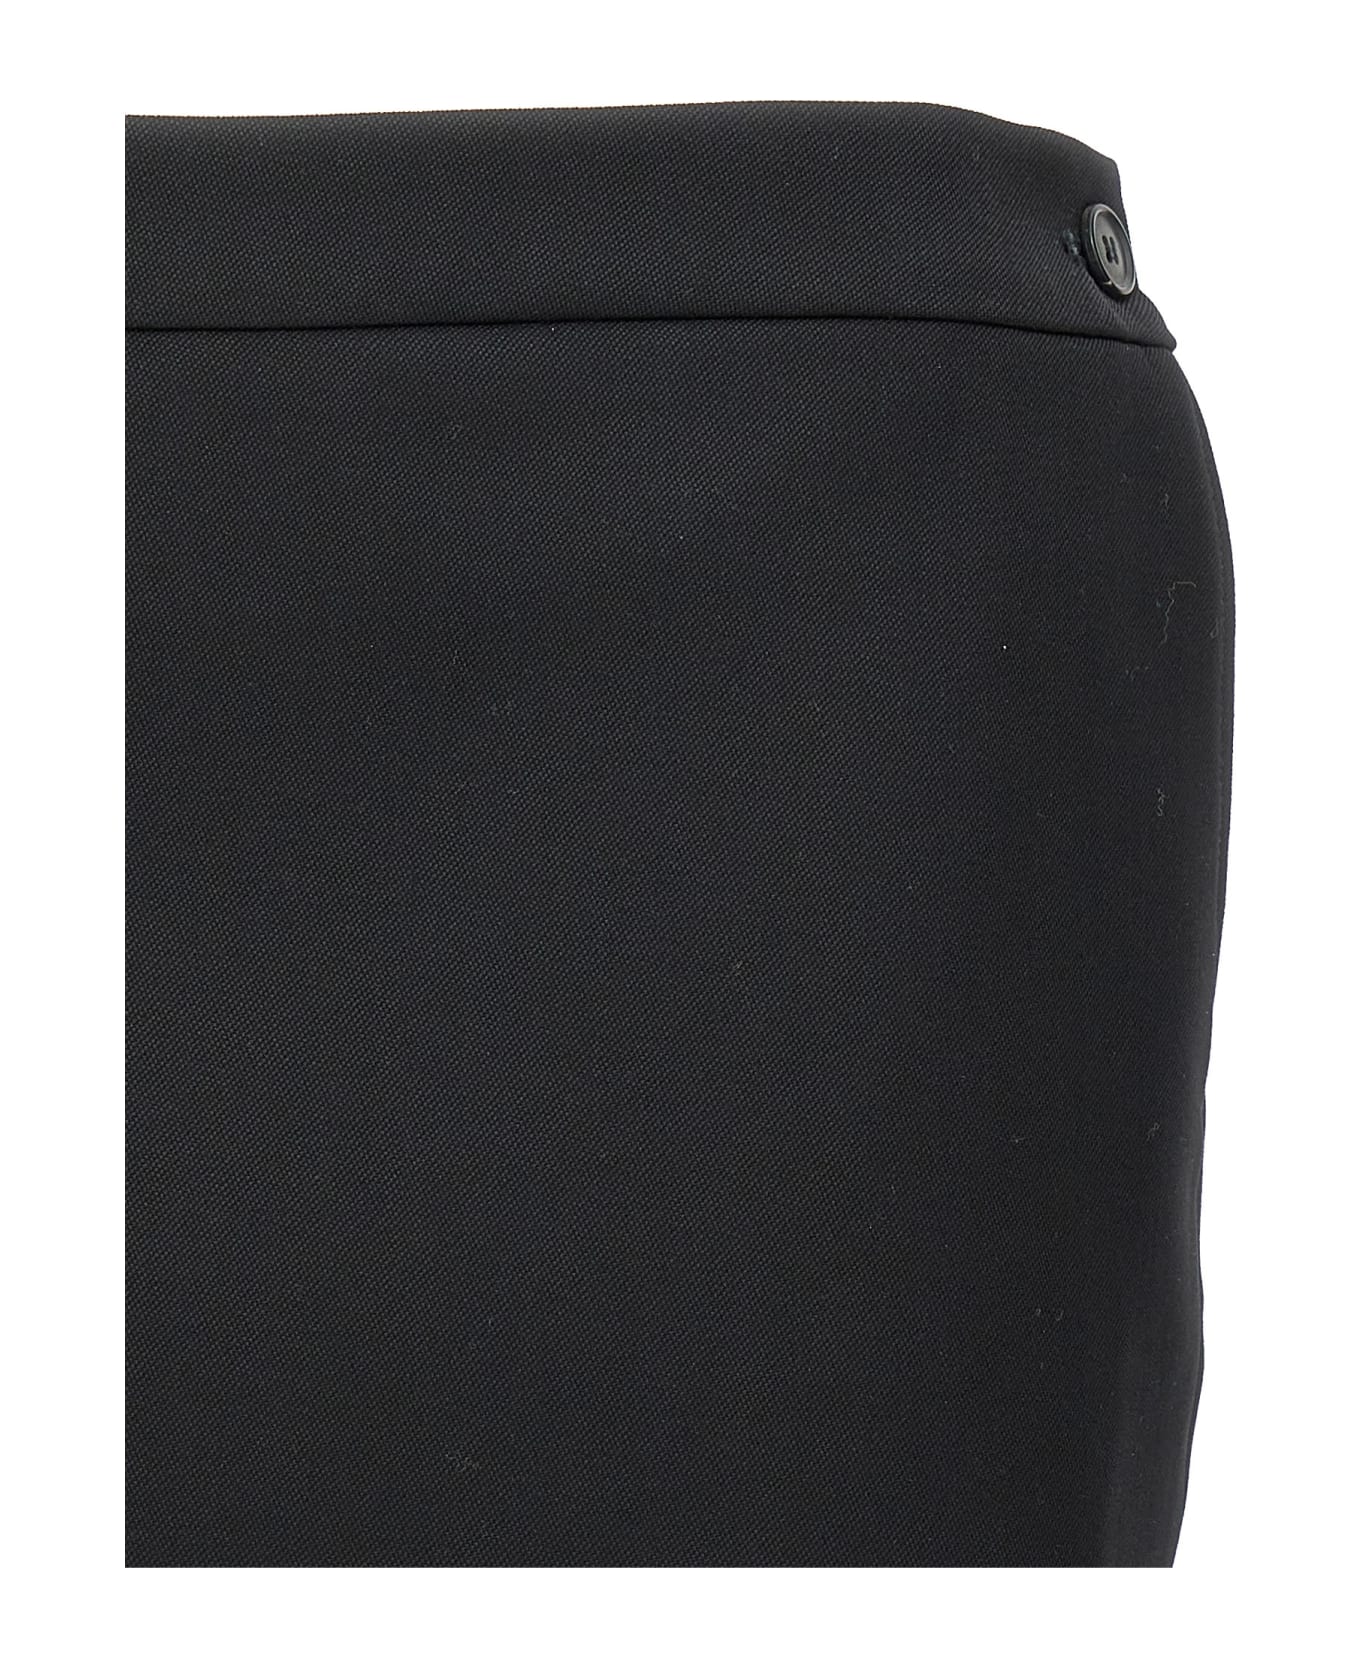 WARDROBE.NYC Mini Skirt - Black  